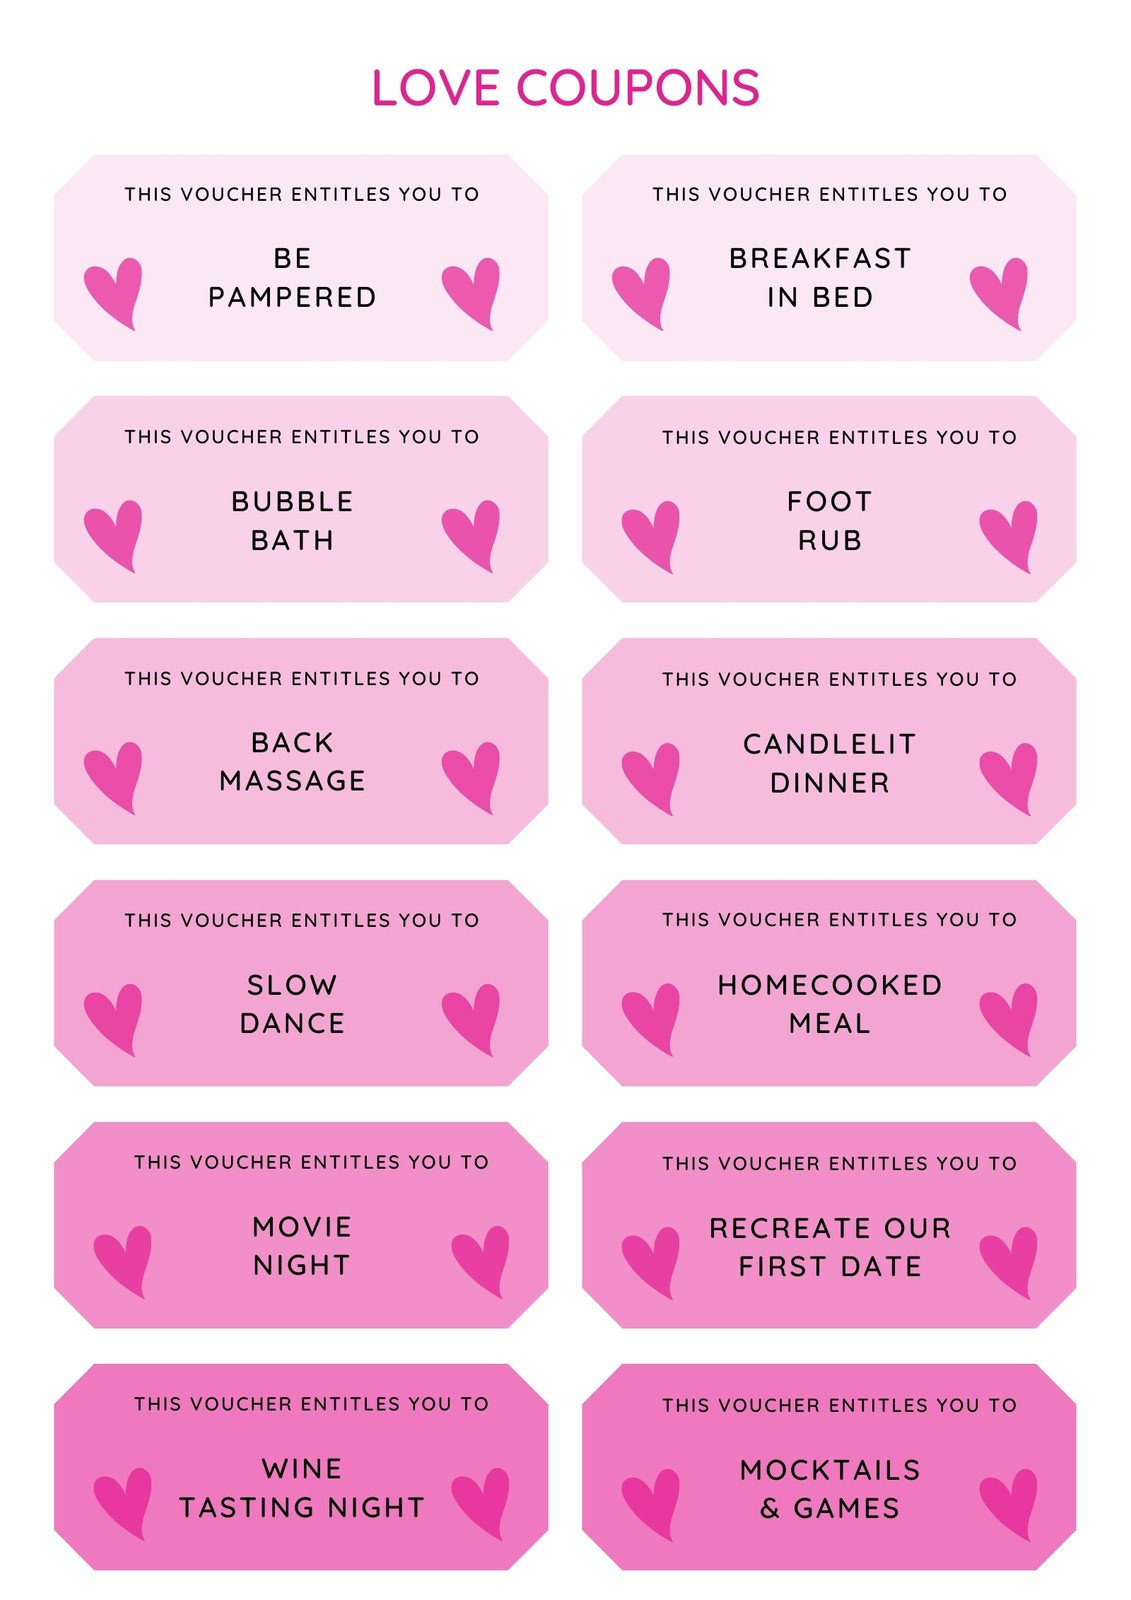 Free Printable Love Coupon Templates | Canva regarding Free Printable Kinky Coupons For Him